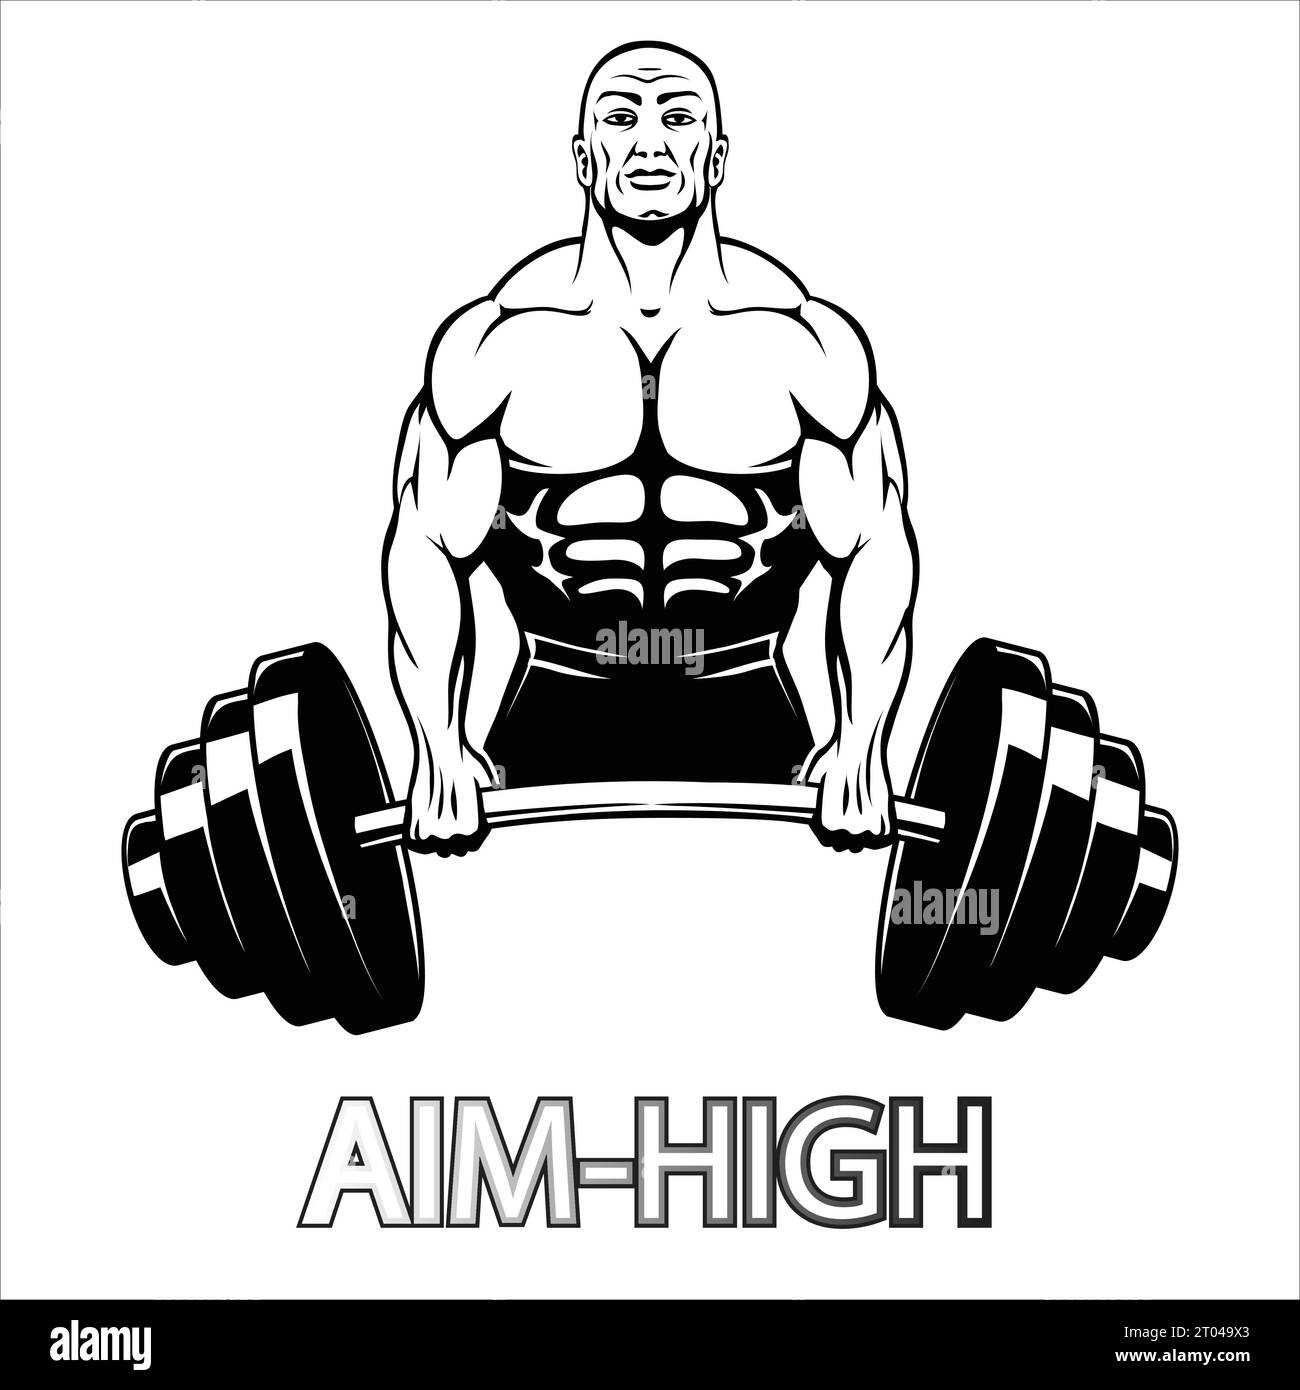 Aim high workout motivational poster Stock Vector